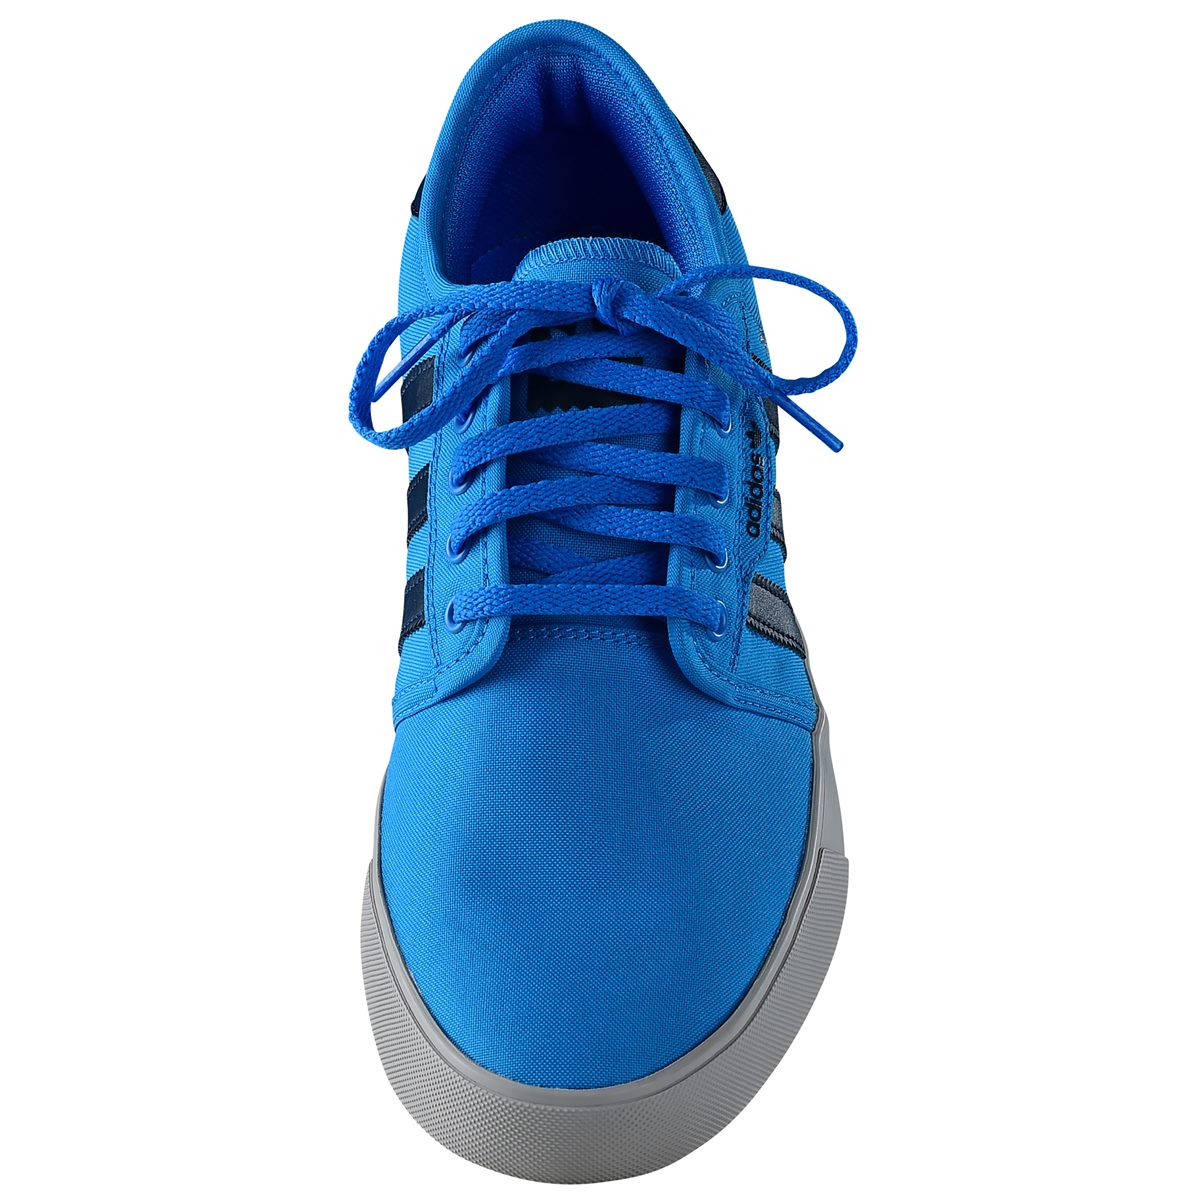 adidas x troy lee designs shoes